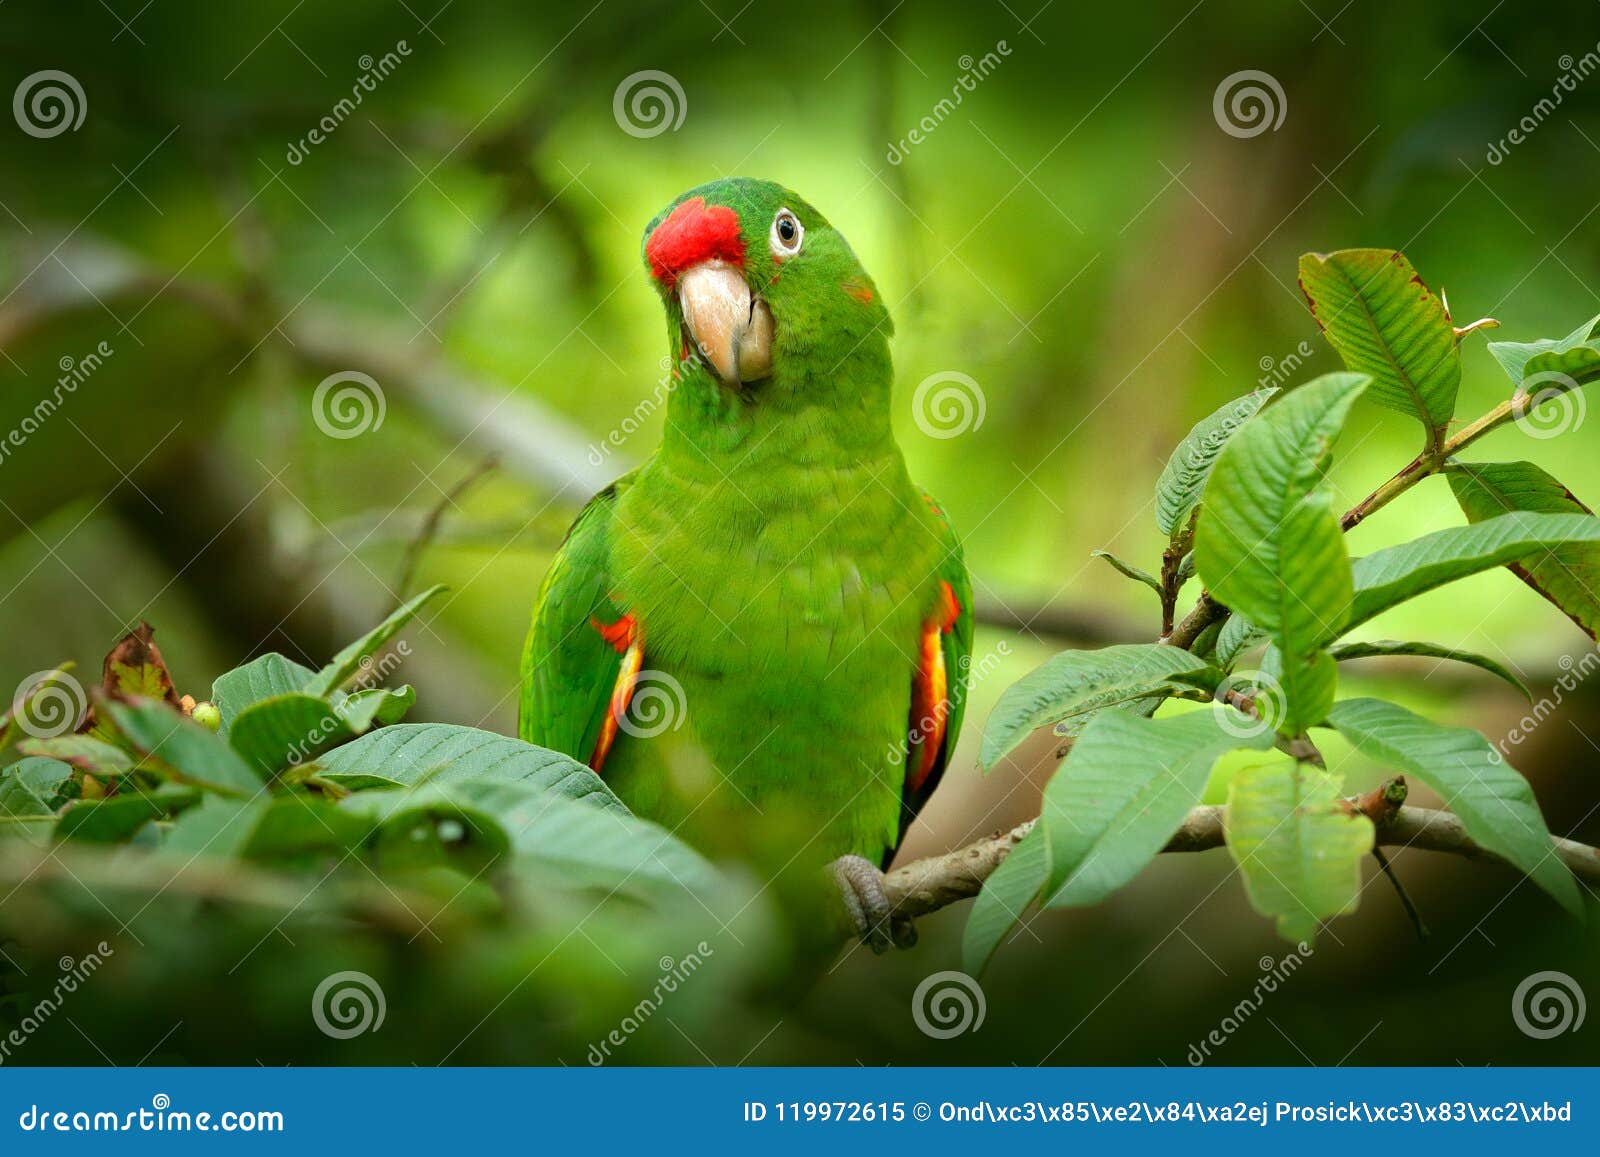 bird in the habitat. crimson-fronted parakeet, aratinga funschi, portrait of light green parrot with red head, costa rica. wildlif